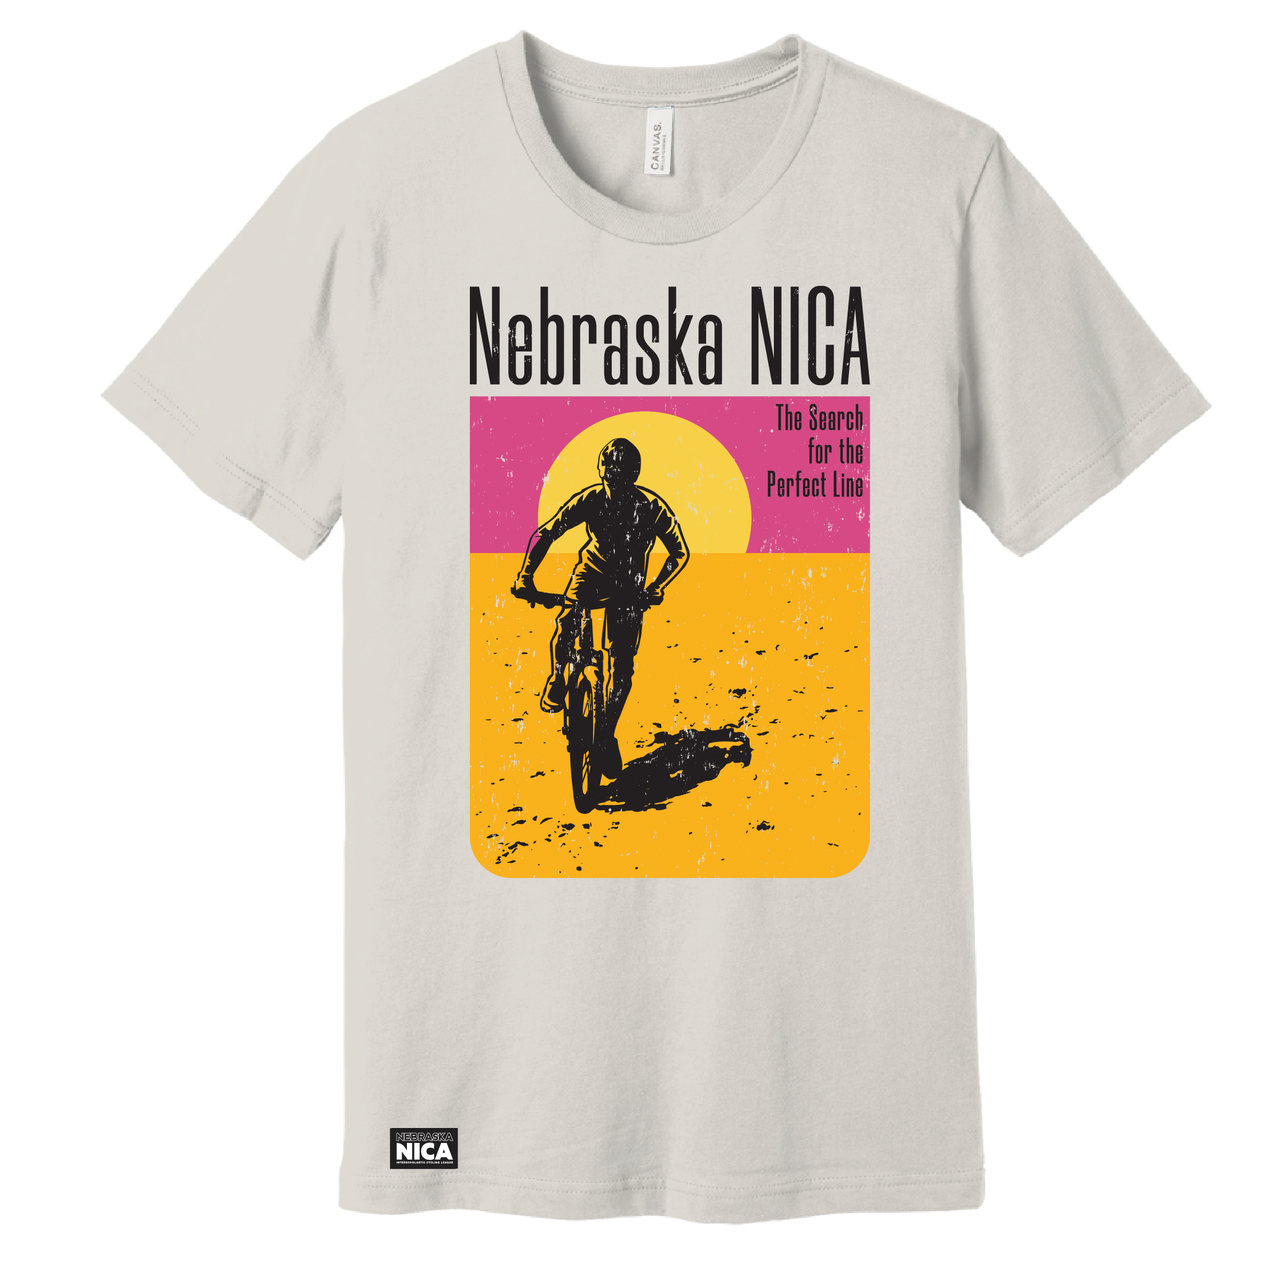 Nebraska NICA Endless Summer Tee